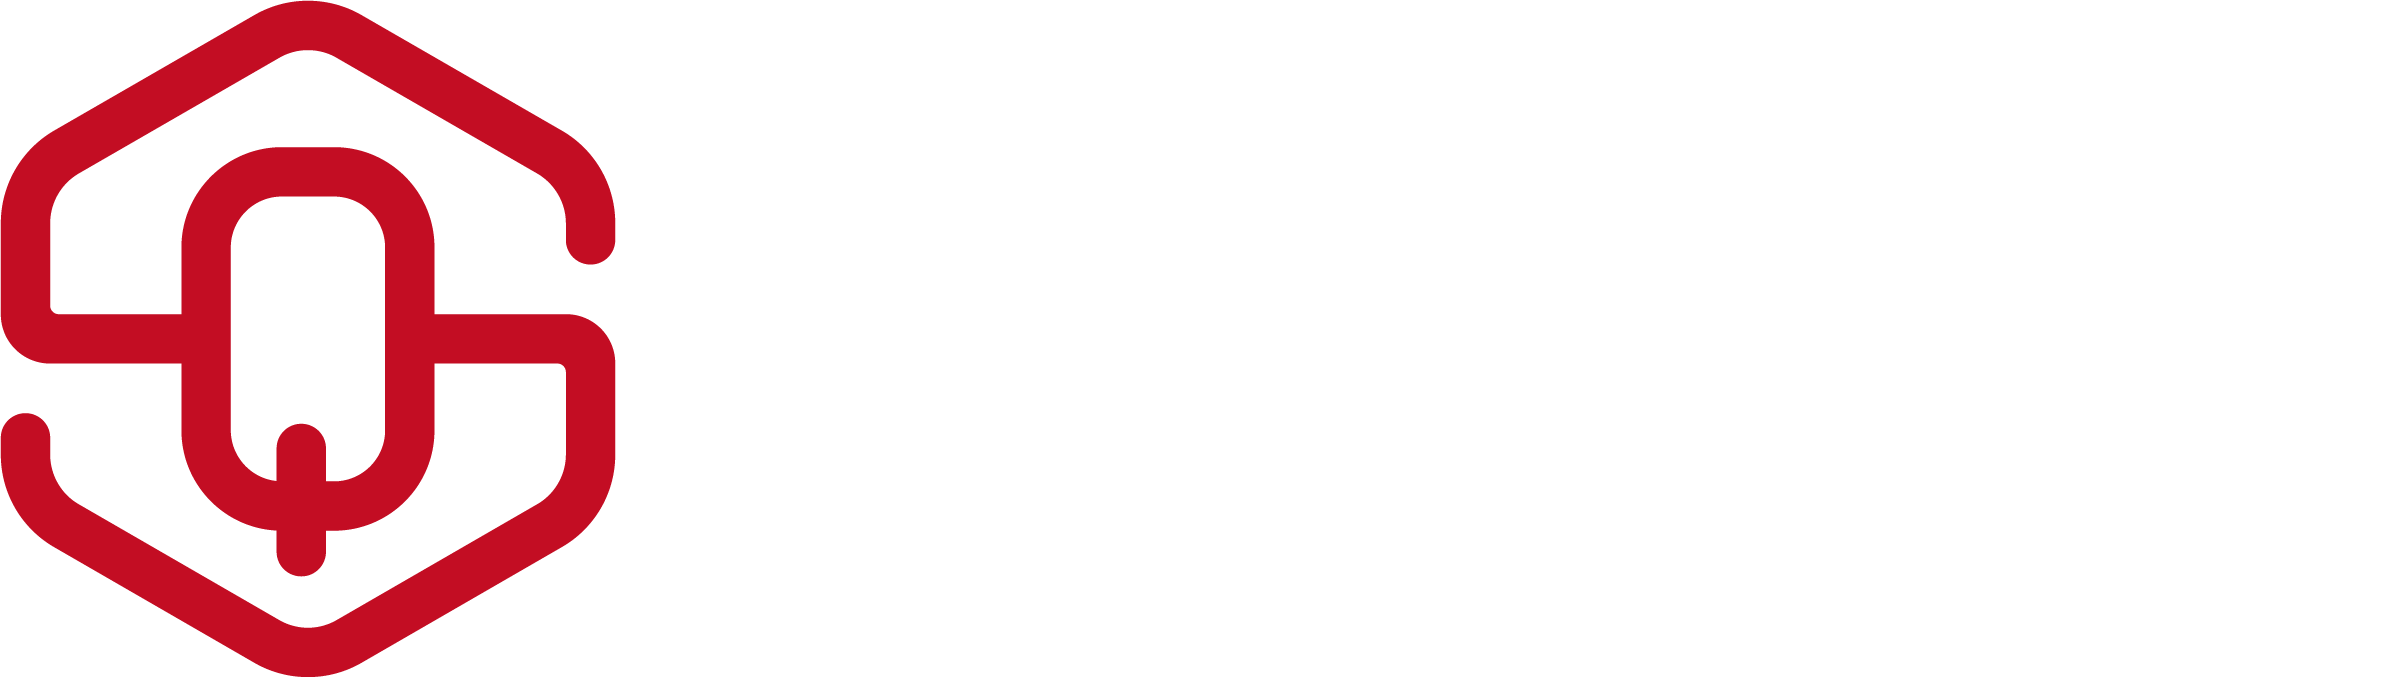 Welcome To Samqing